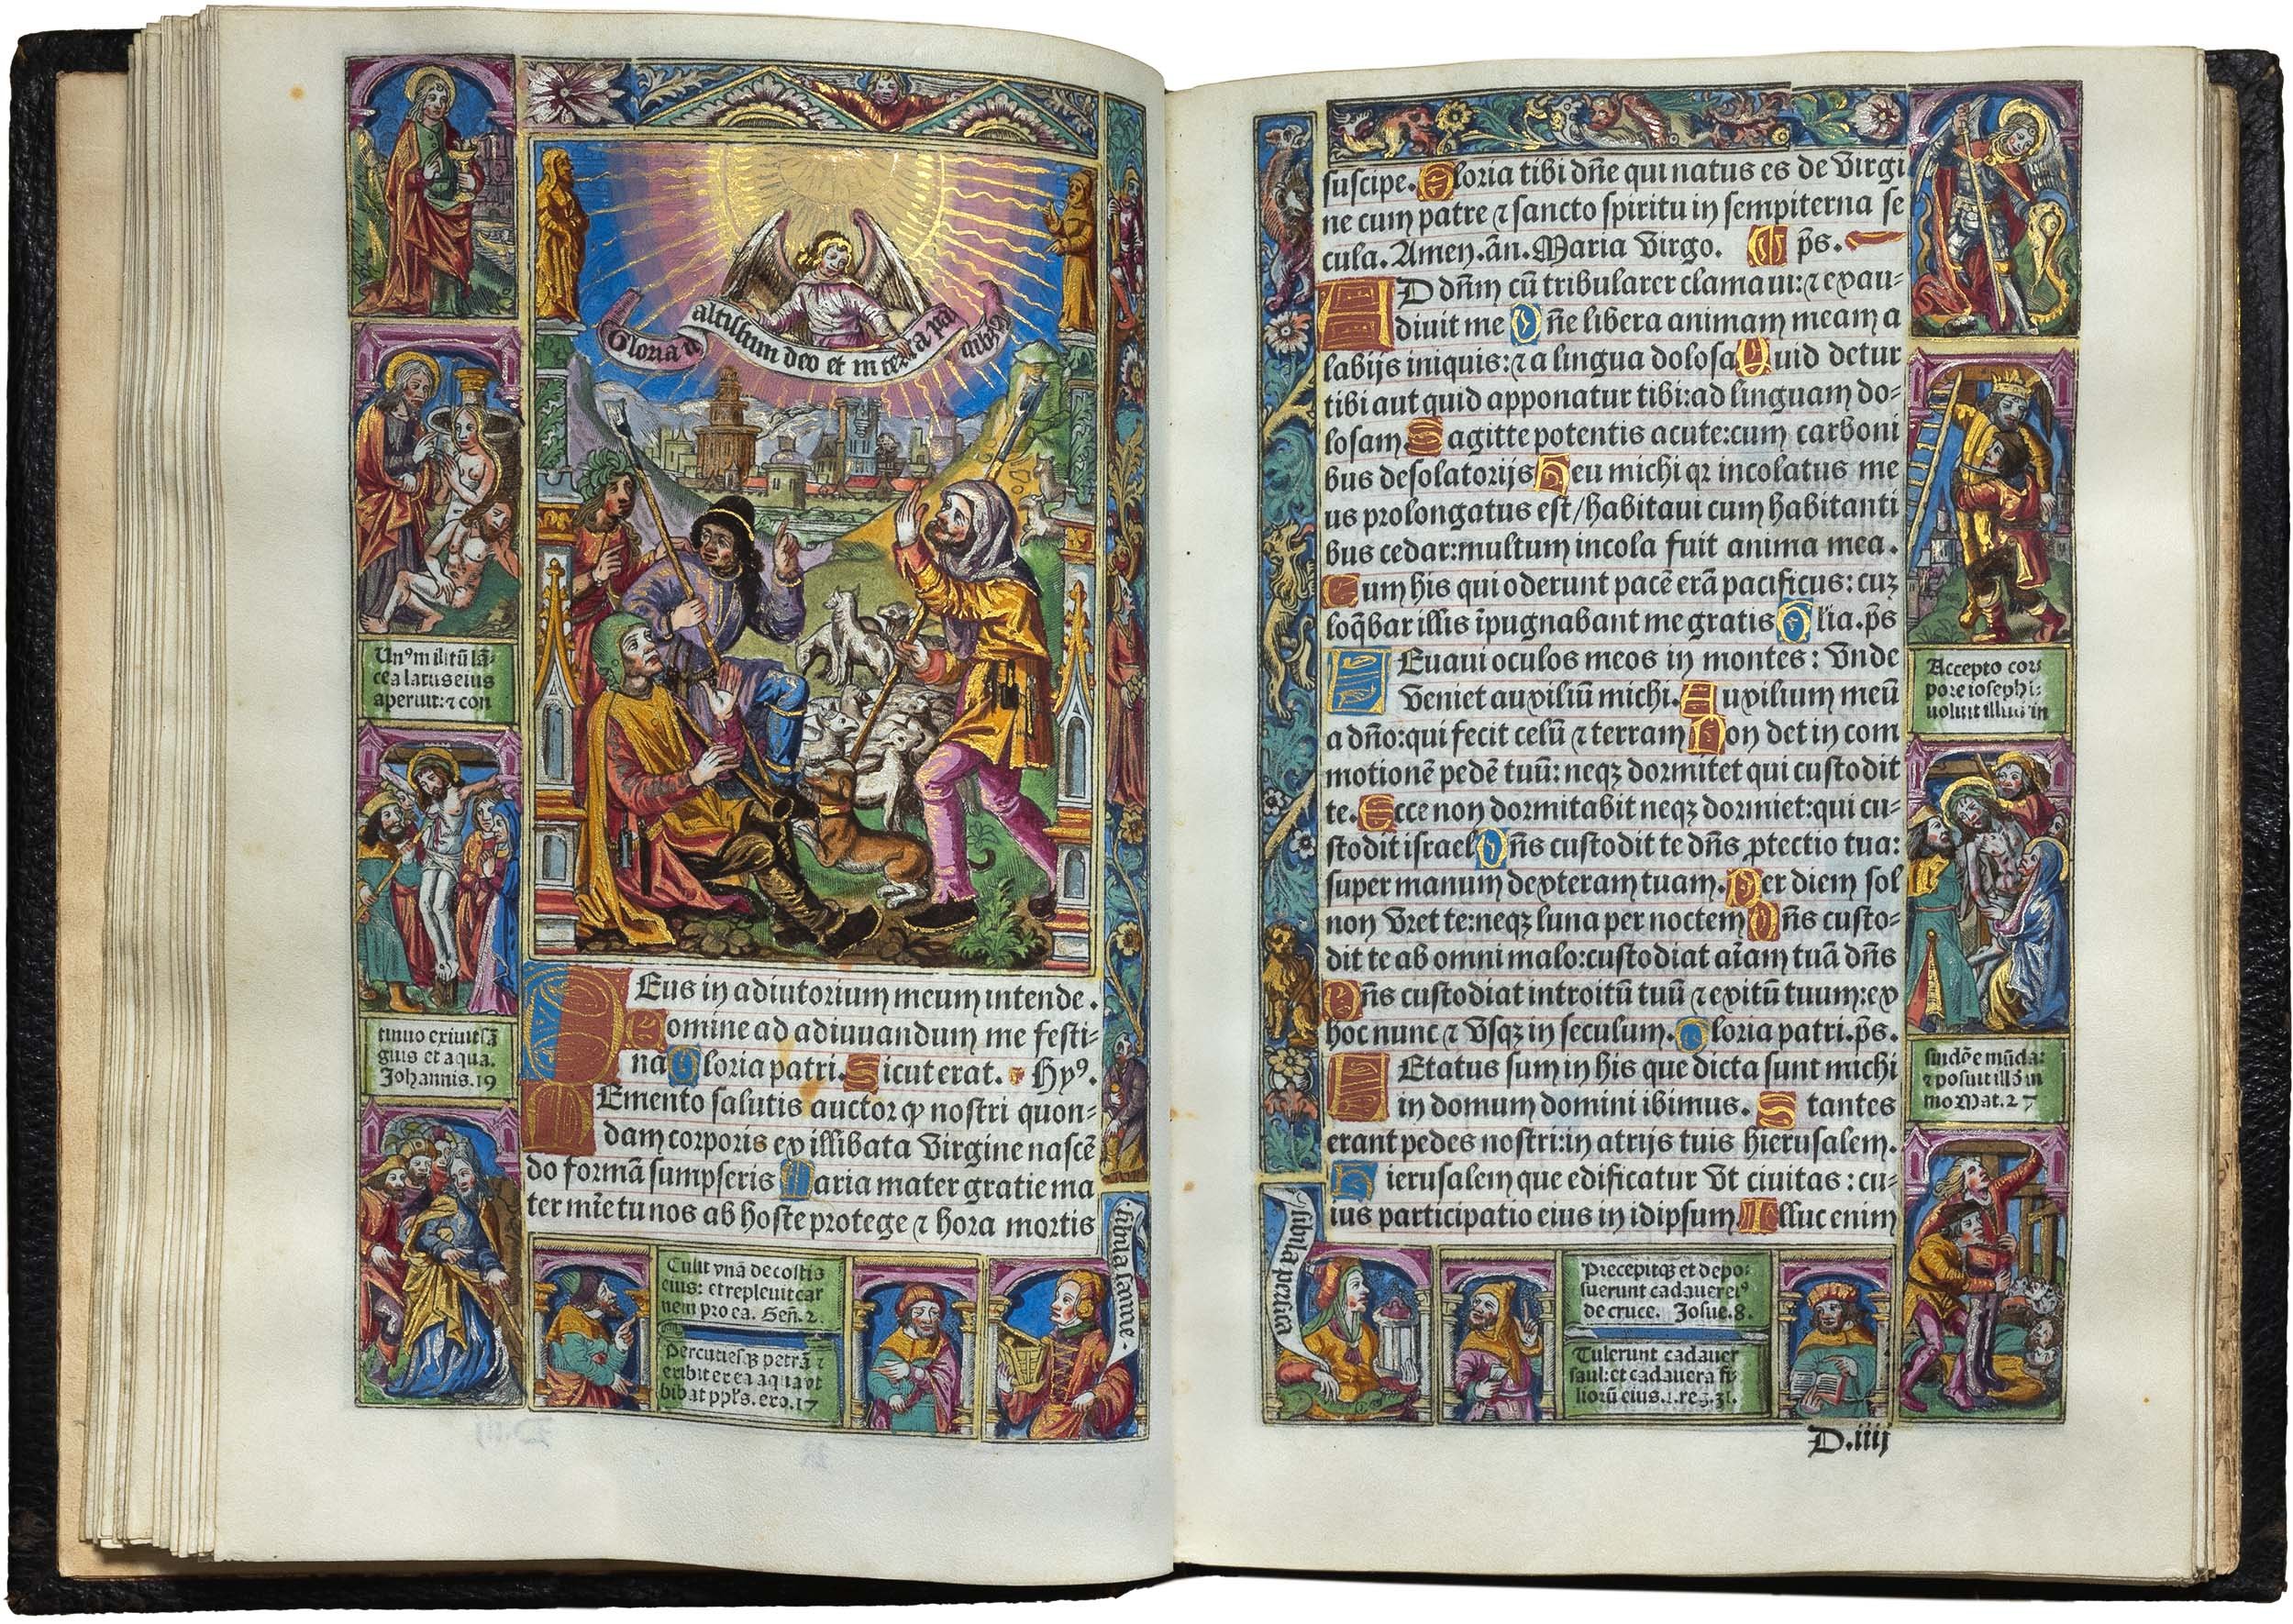 Printed-Book-of-Hours-10-january-1503-horae-bmv-kerver-remacle-illuminated-vellum-copy-schönborn-buchheim-31.jpg